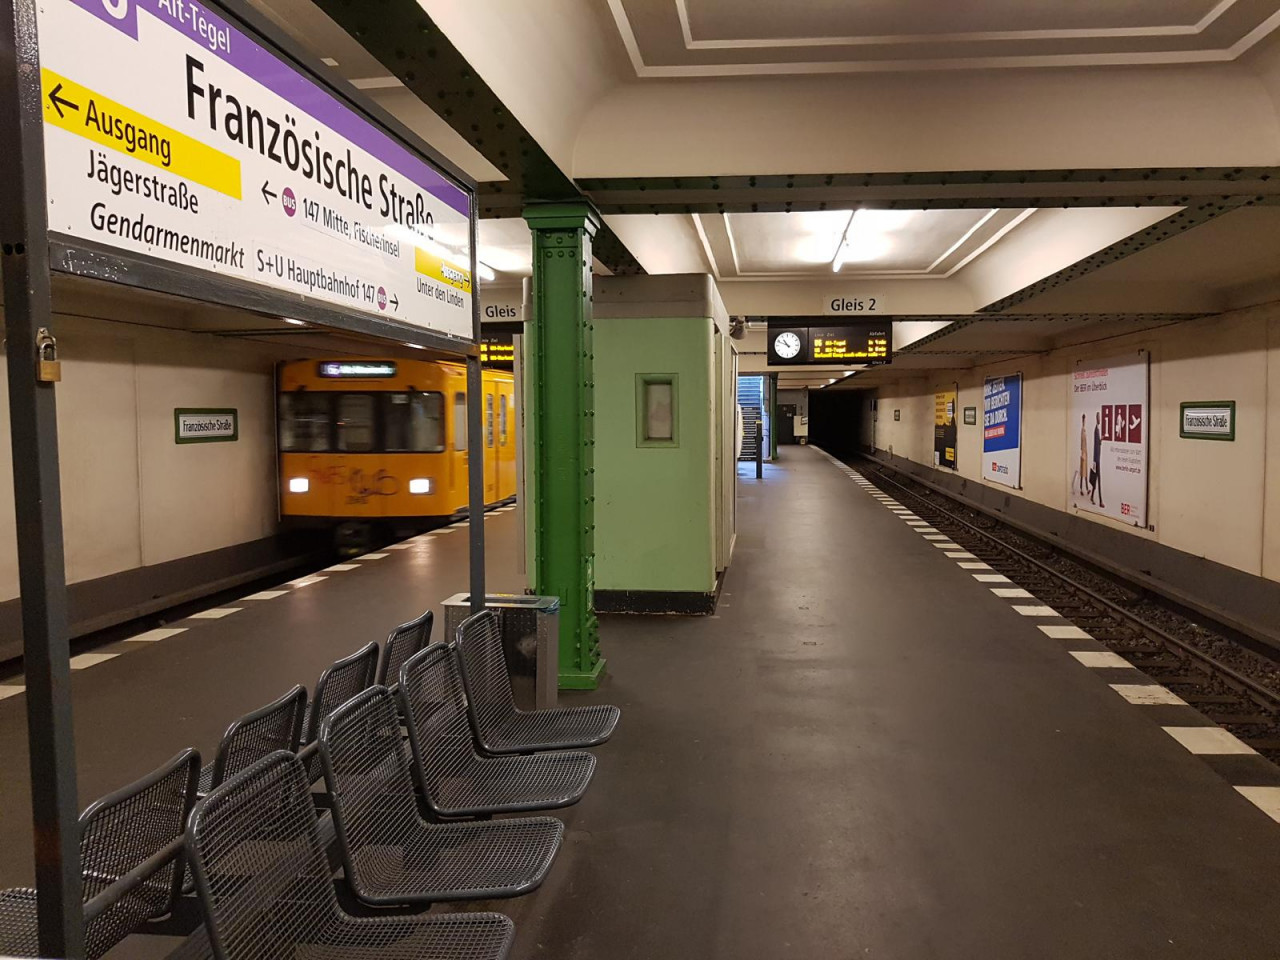 Stanice Franzsische Strae v listopadu 2020, jet v provozu